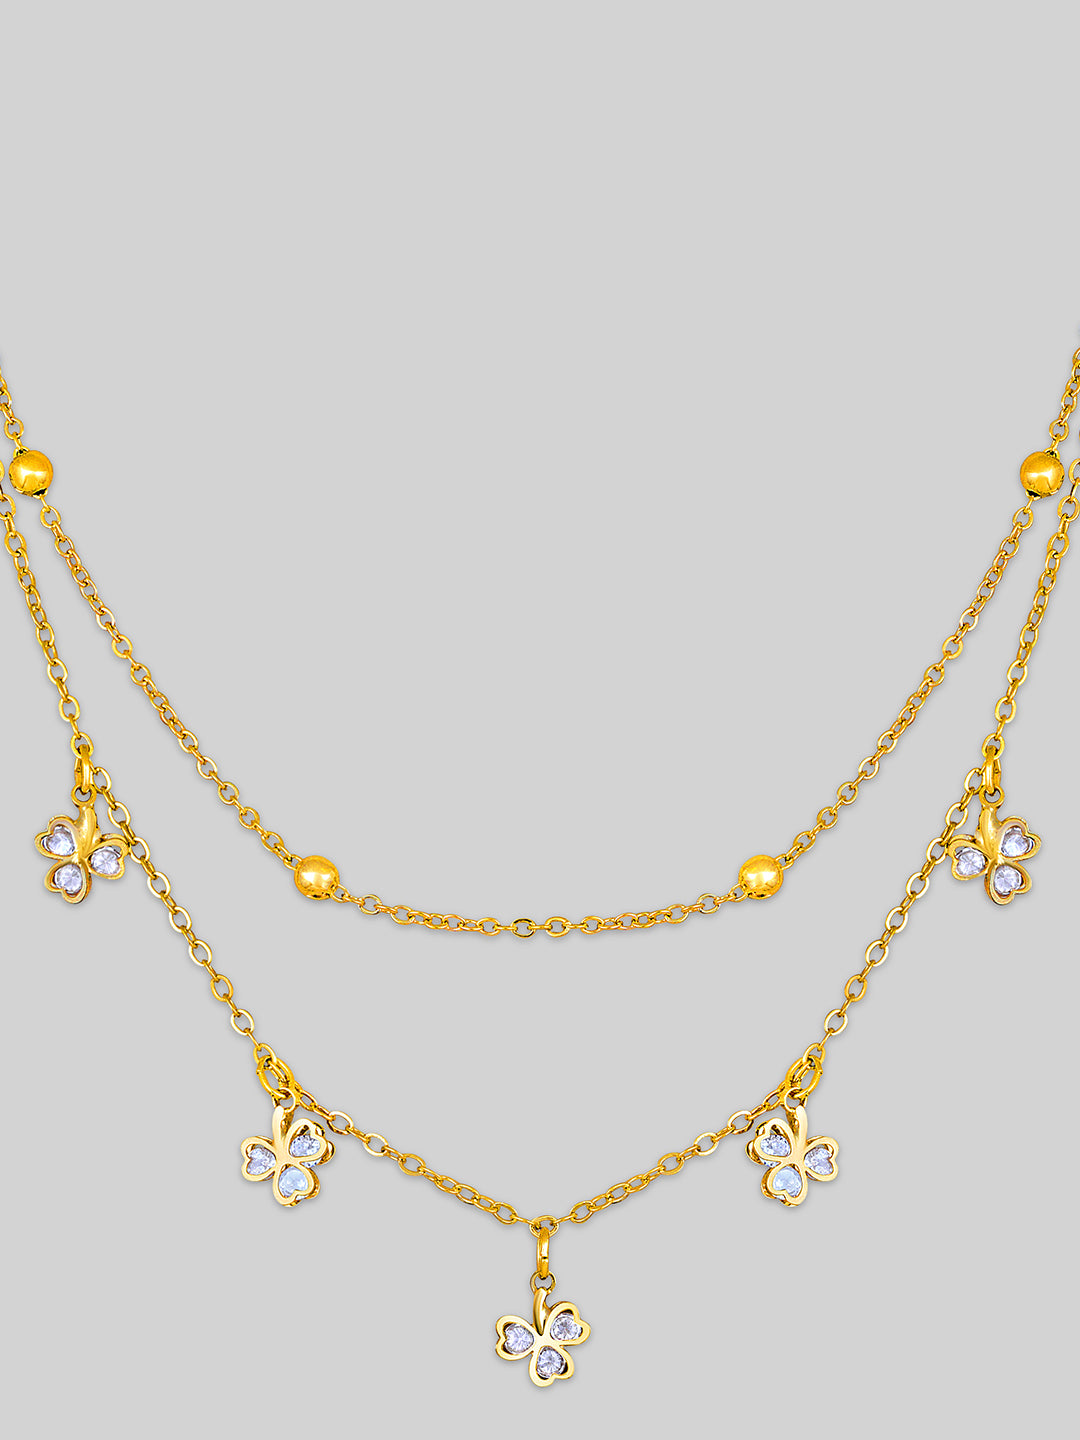 Lavish Necklace Chain For Women